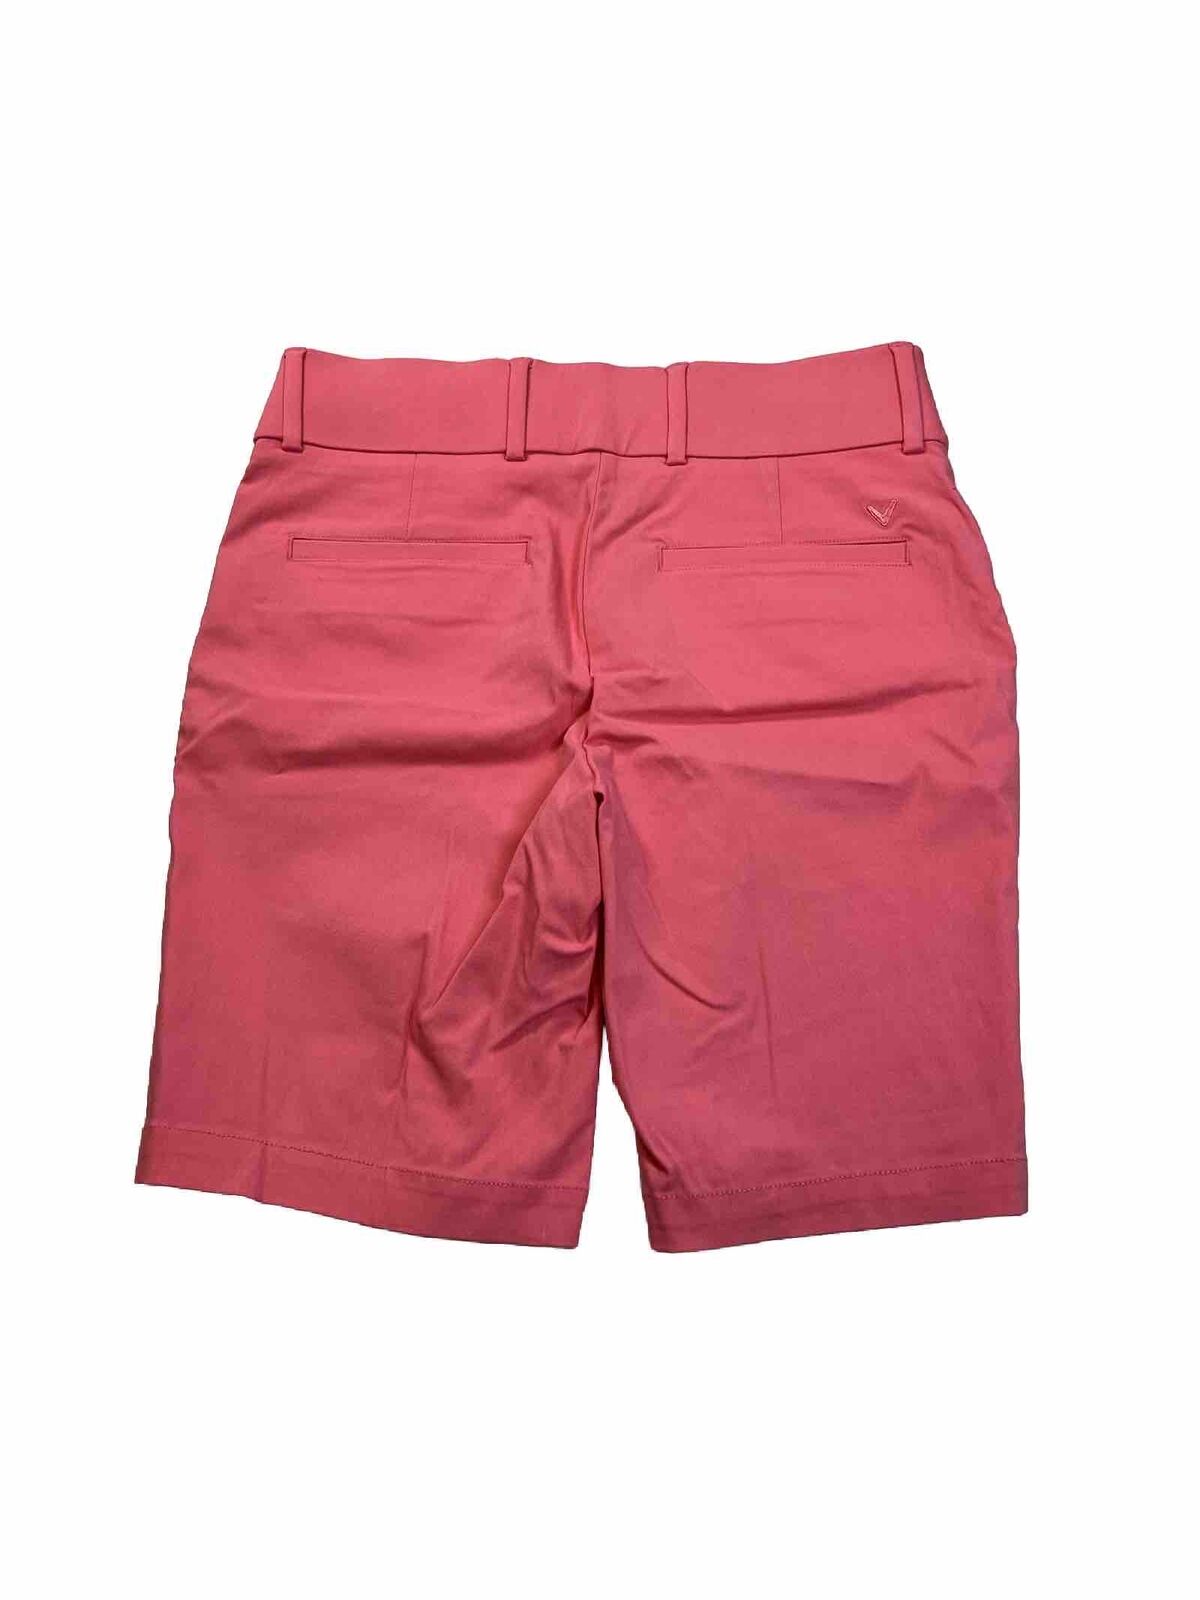 Callaway Women's Pink Opti-Dri Knee Length Athletic Golf Shorts - M